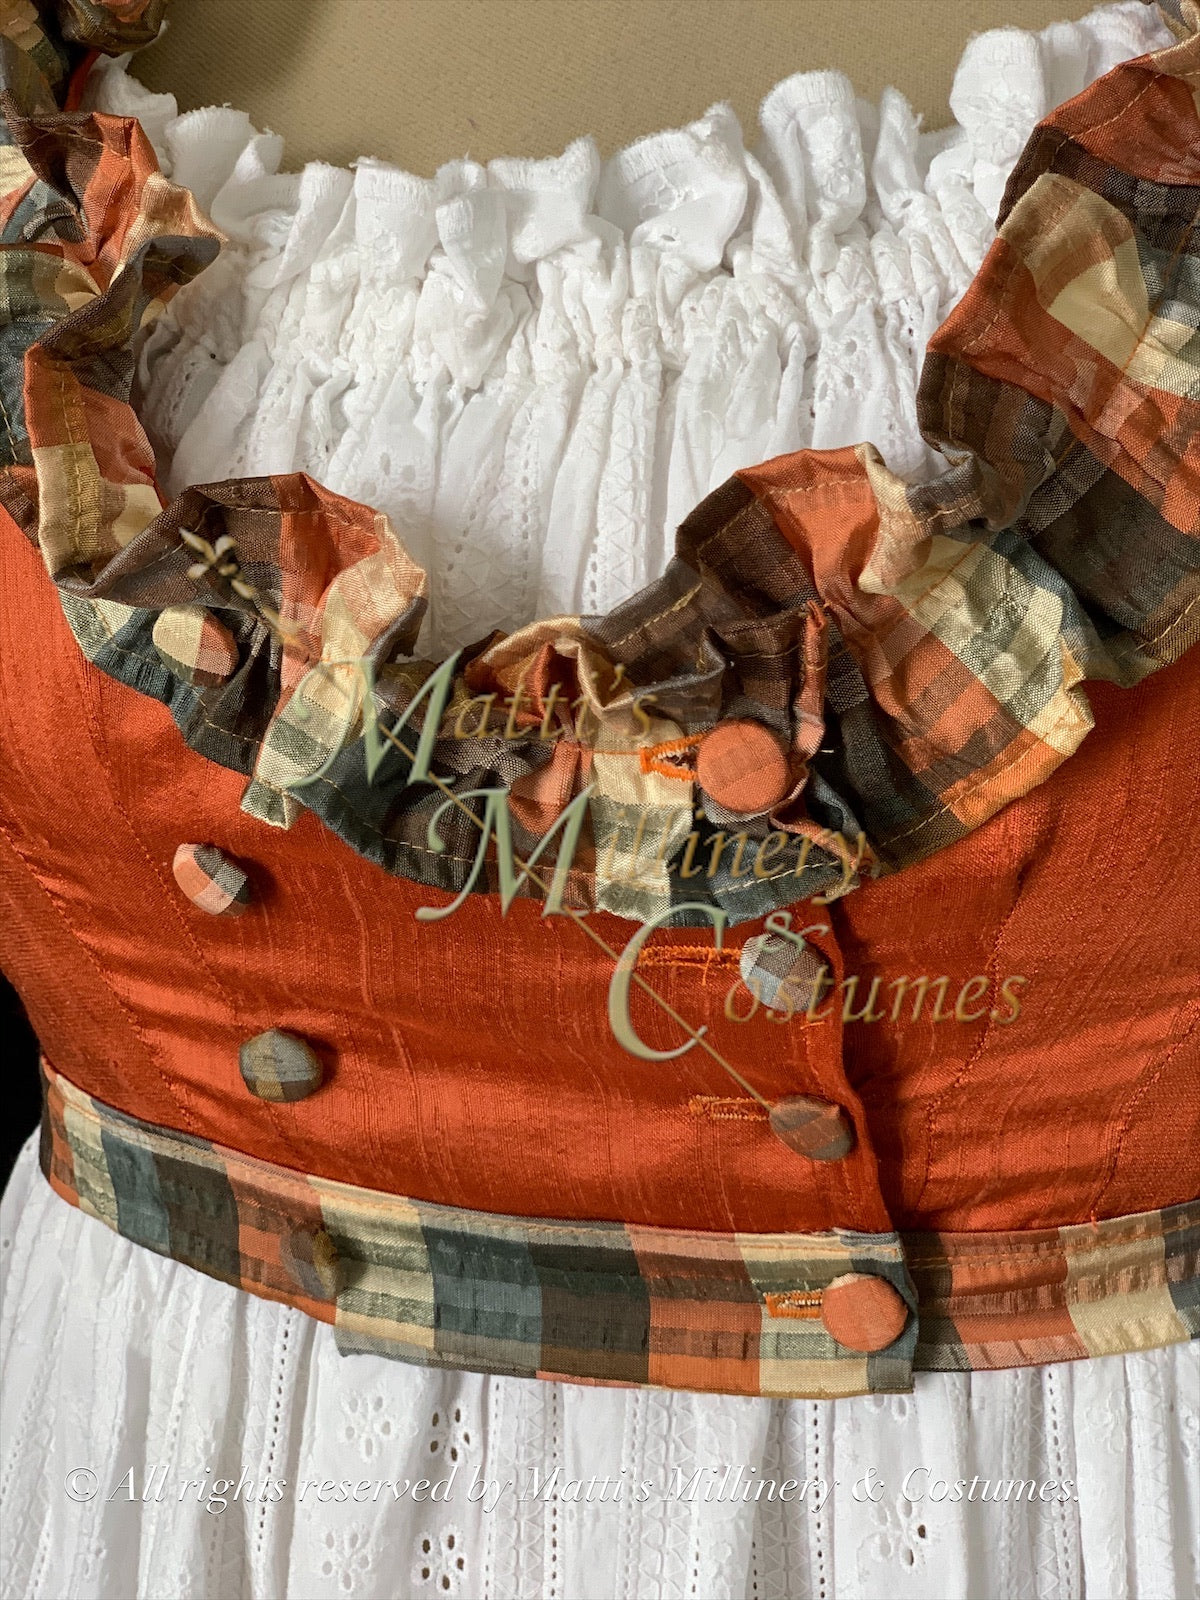 Autumn KATHY Regency Jane Austen Day Dress Spencer Short Jacket Pelisse